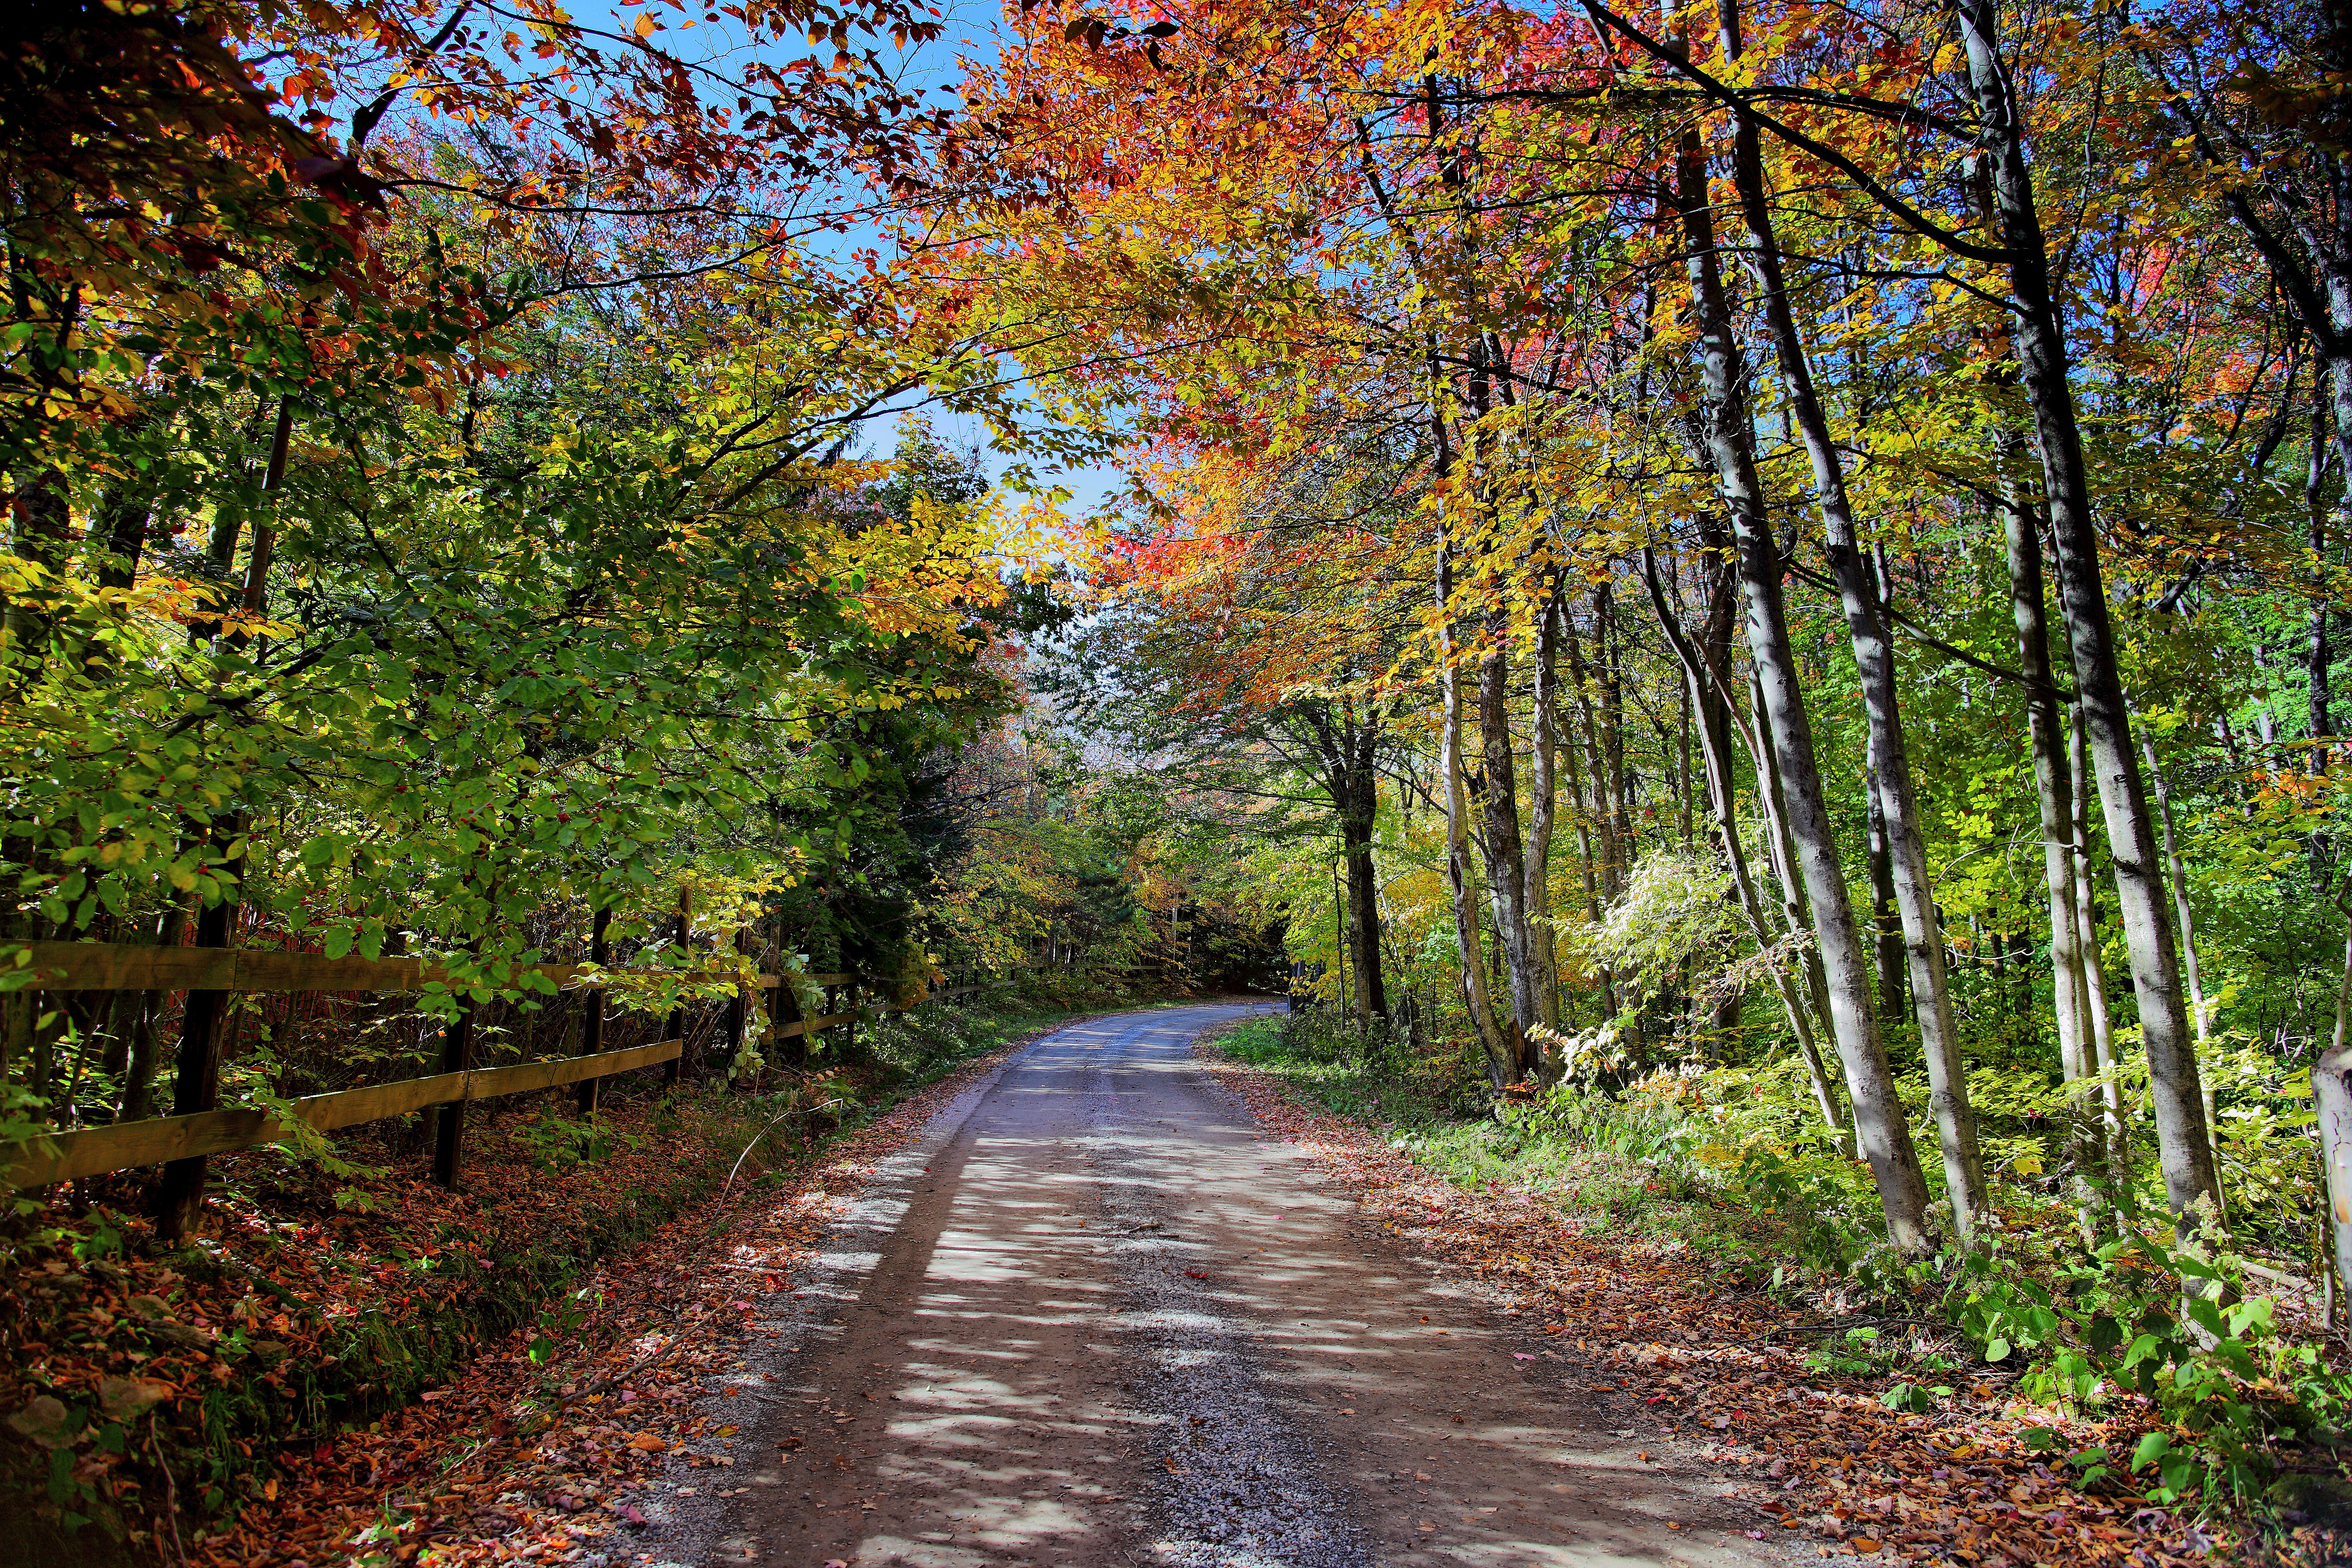 File:Autumn-trees-country-road-fence - ForestWander.jpg - Wikimedia ...